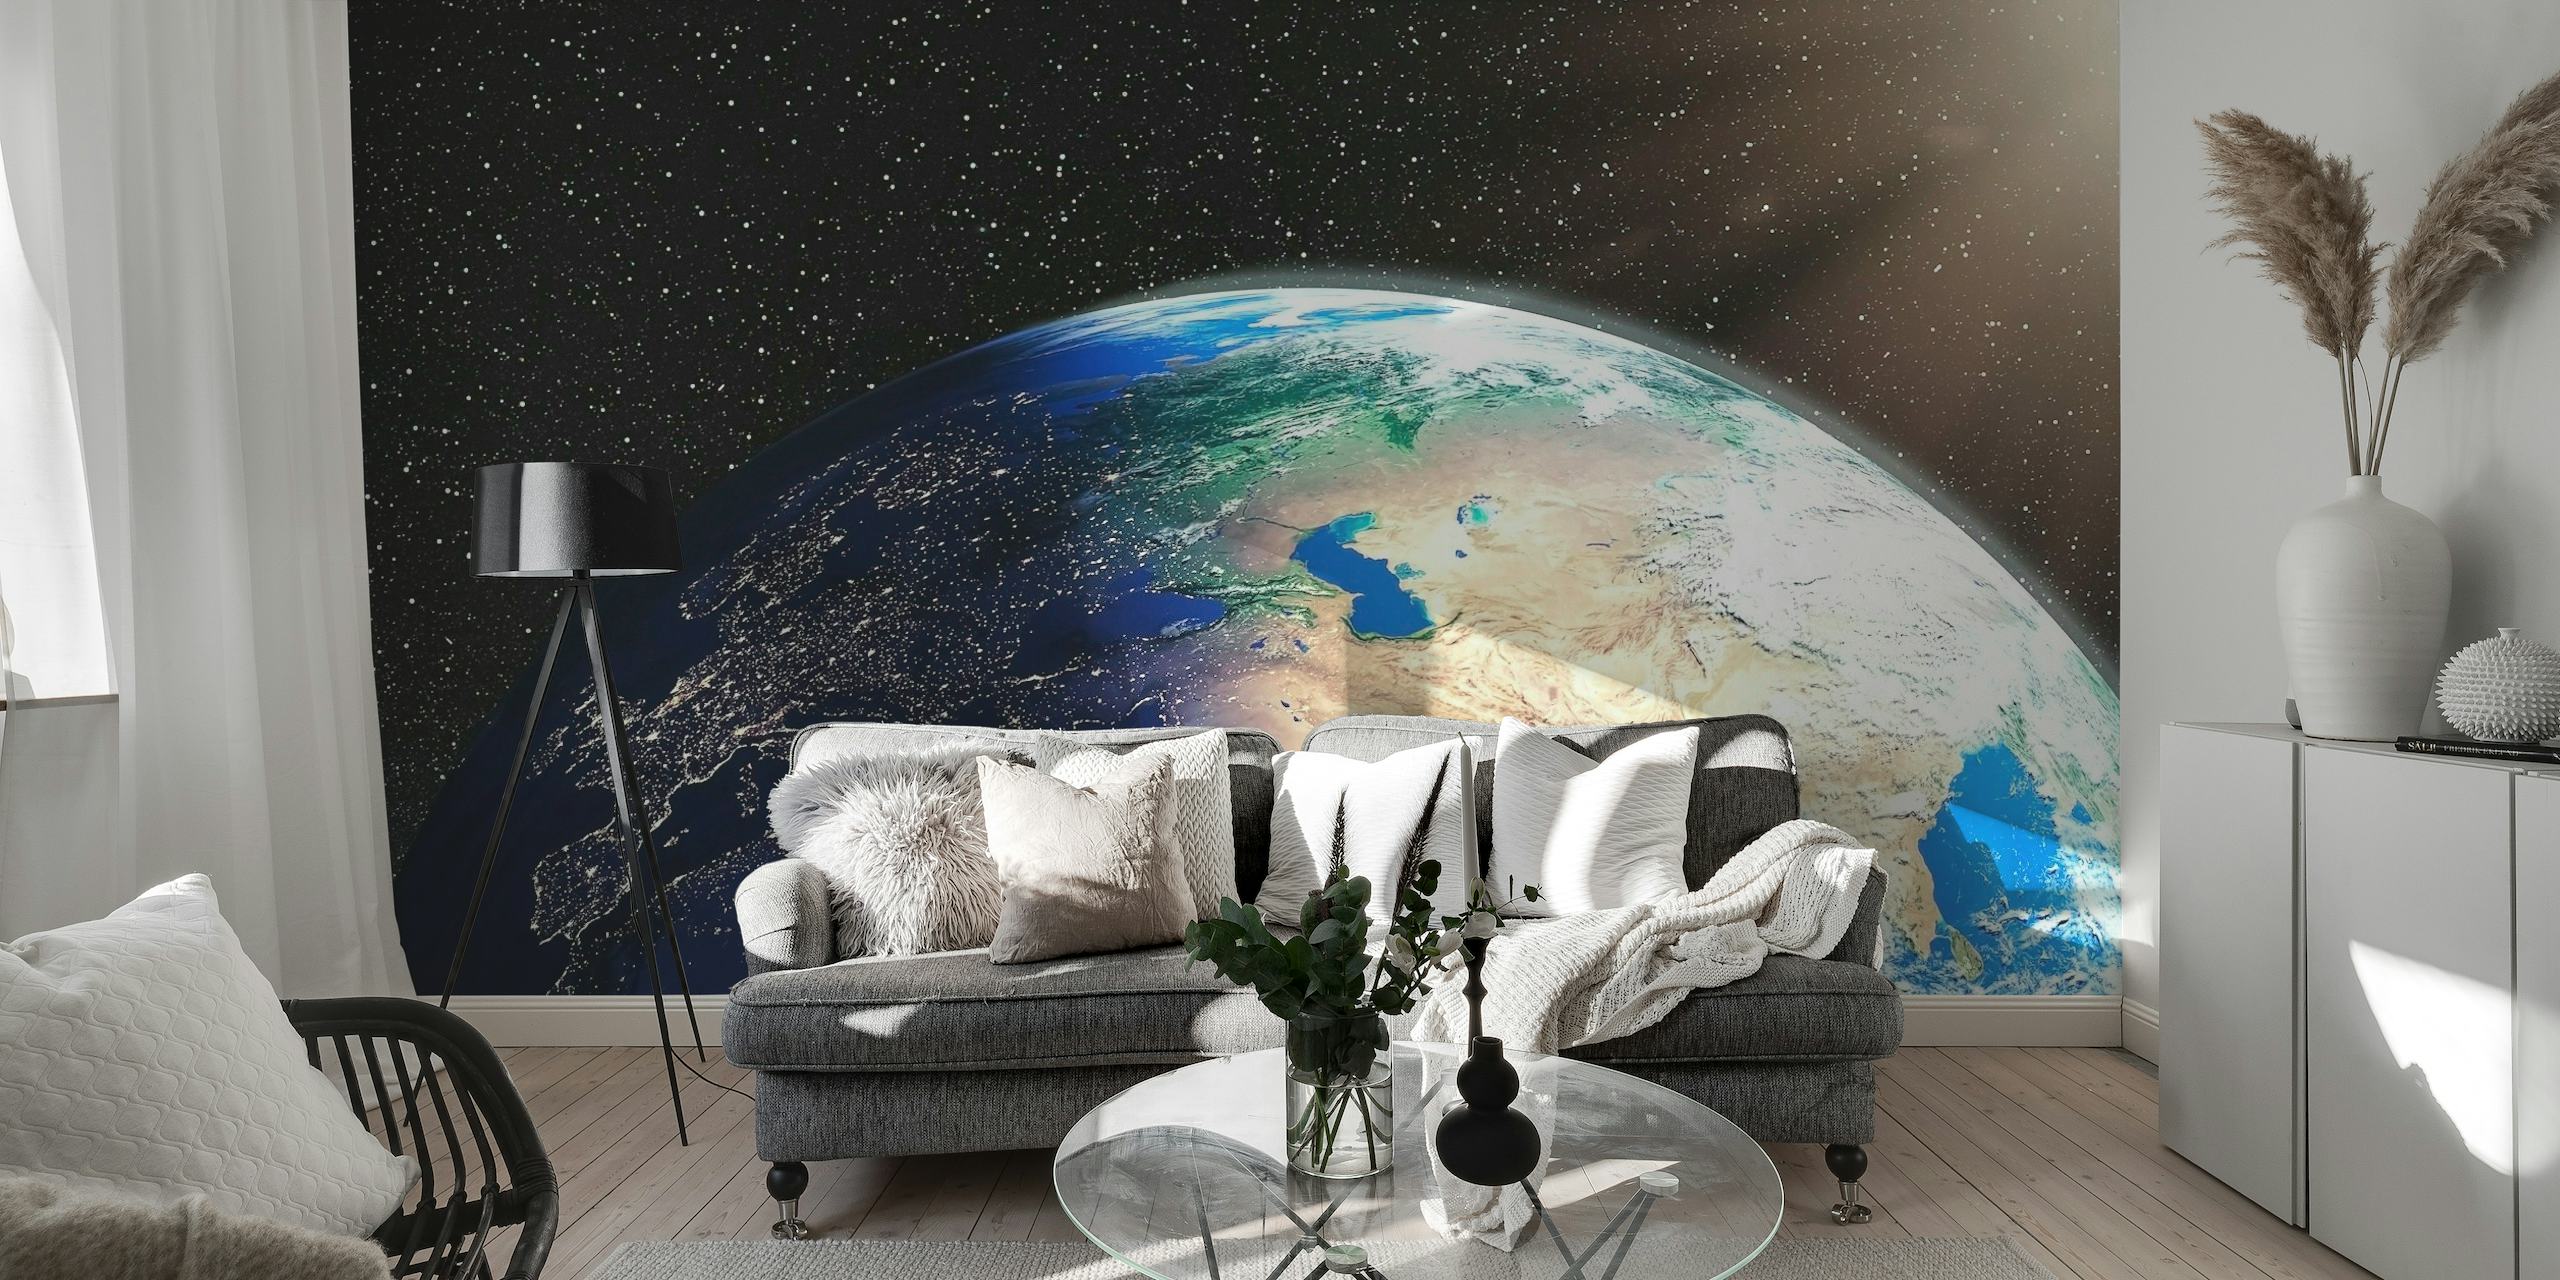 The Planet Earth papel pintado